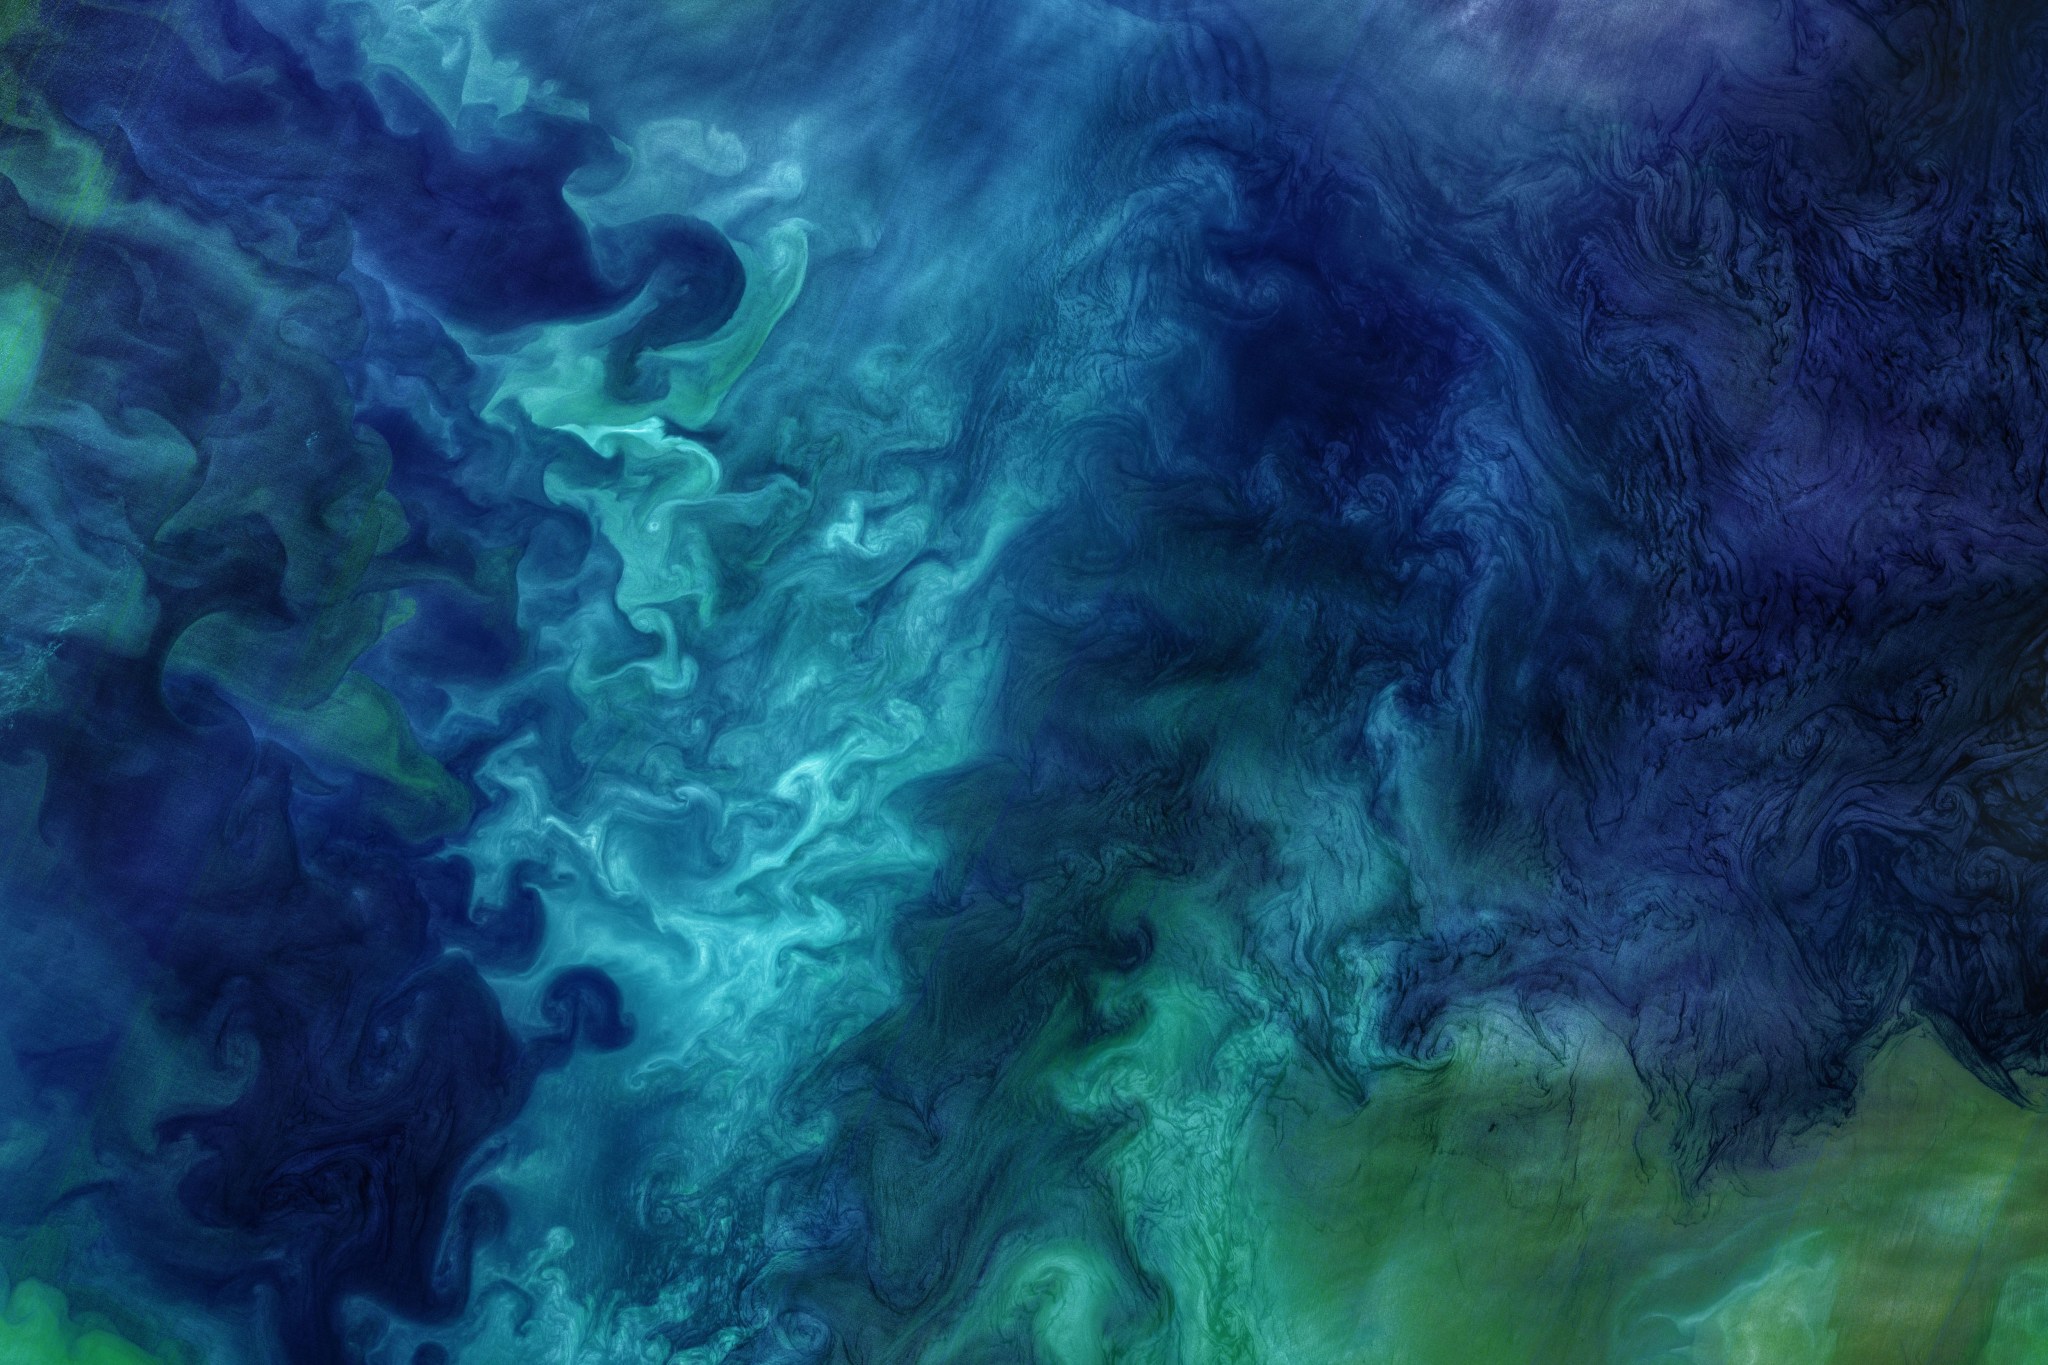 Image of the Chukchi Sea taken by the Landsat 8 satellite